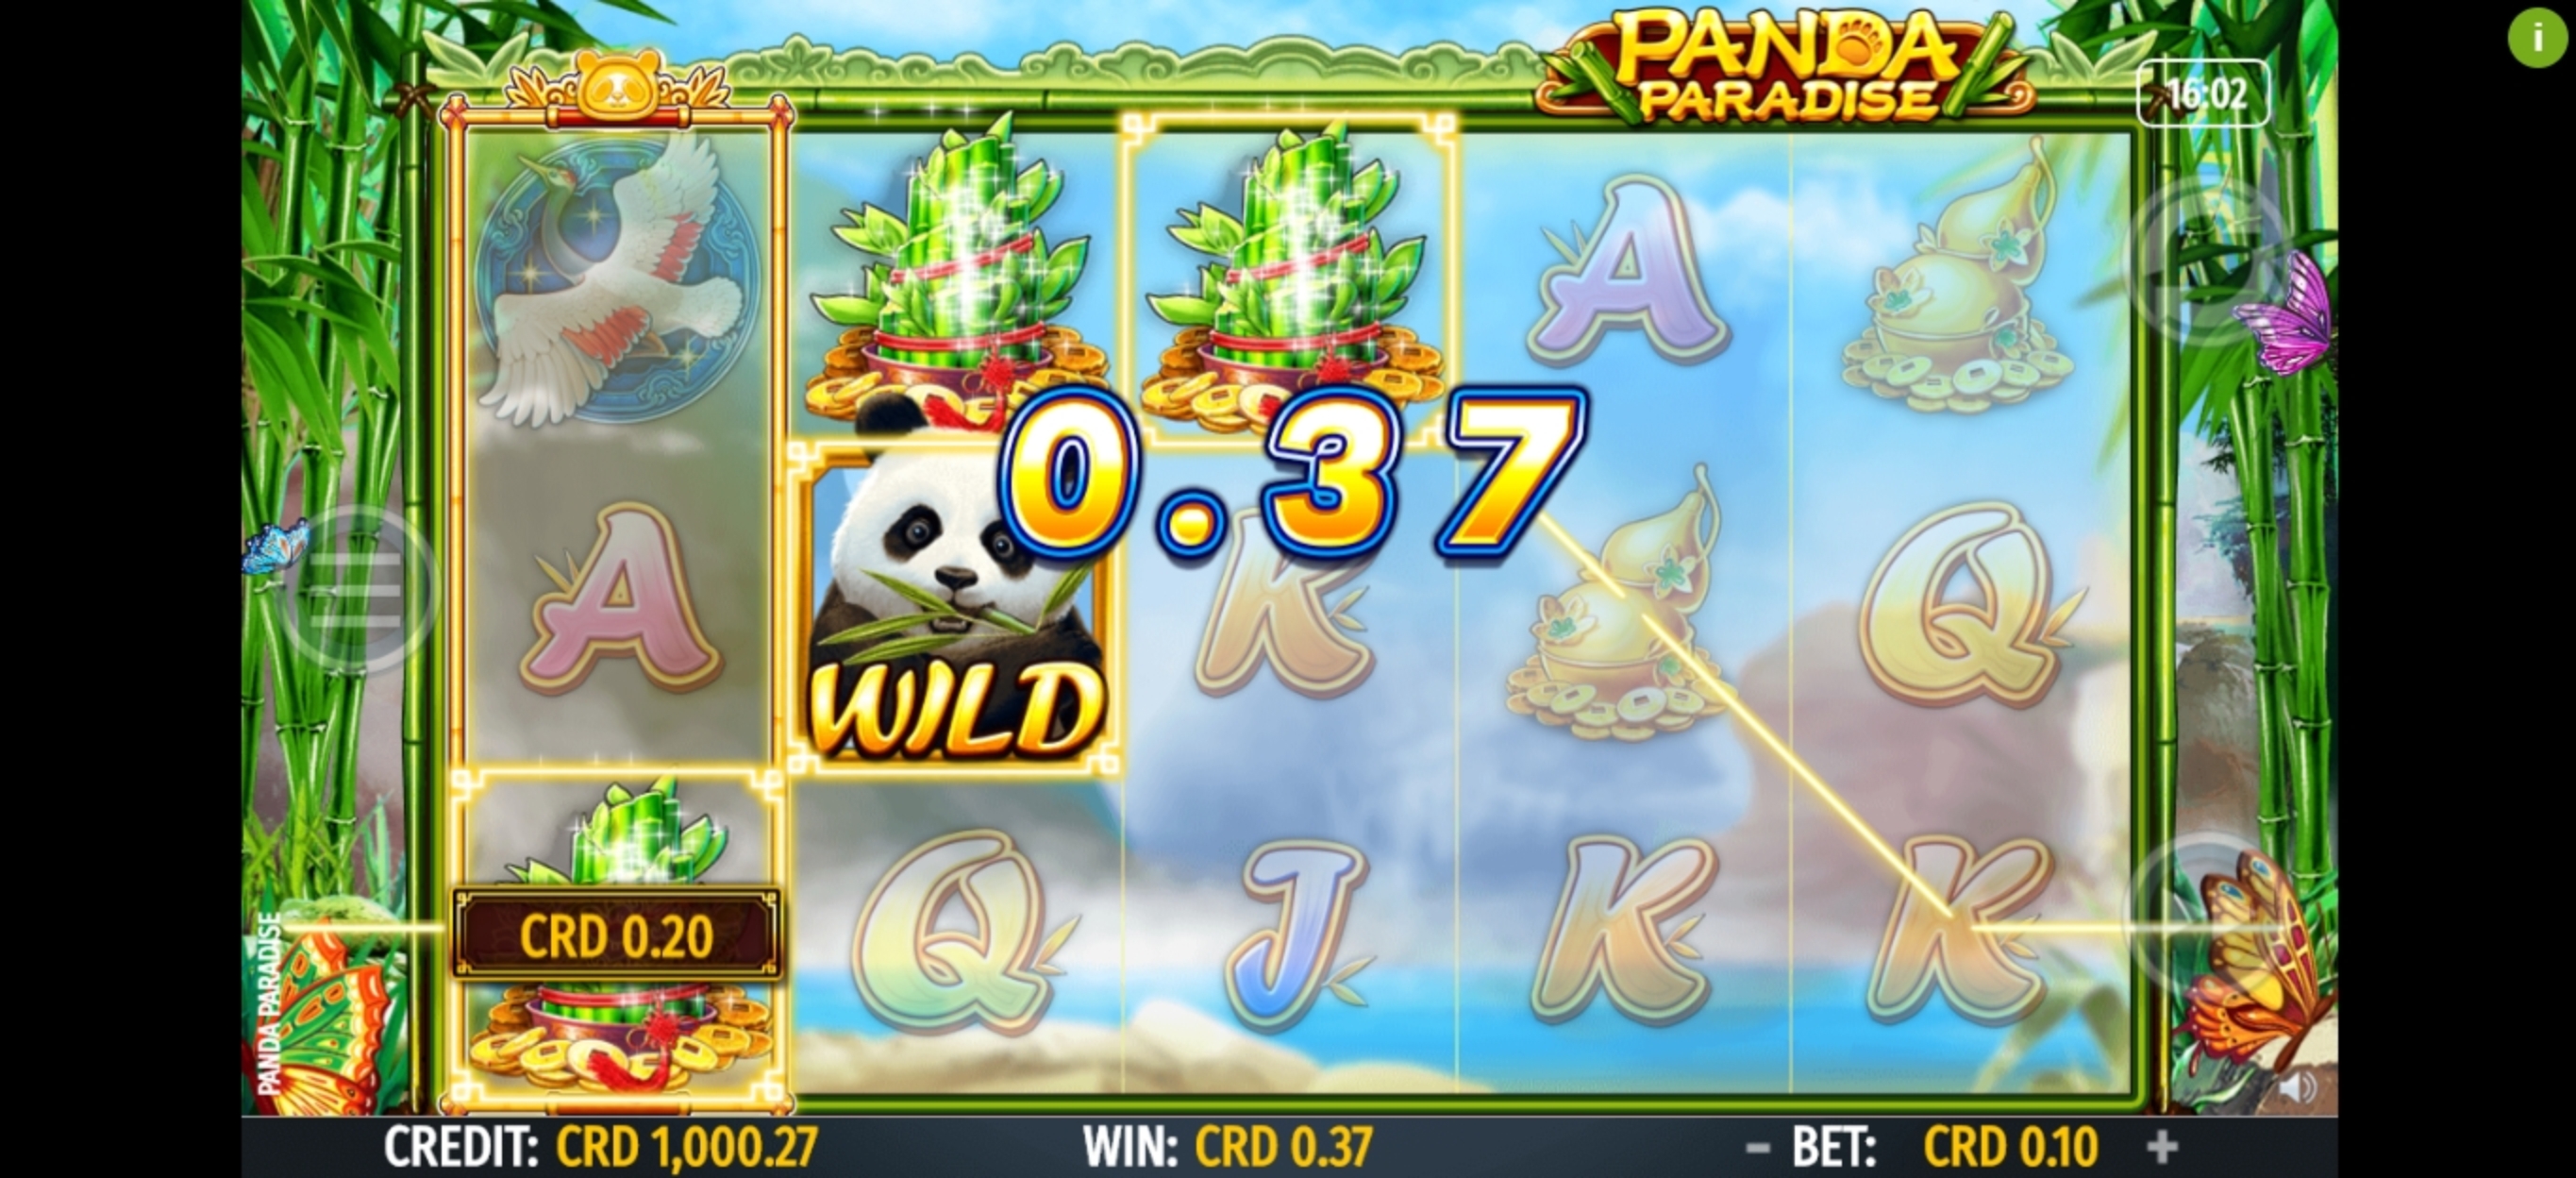 Win Money in Panda Paradise Free Slot Game by Octavian Gaming